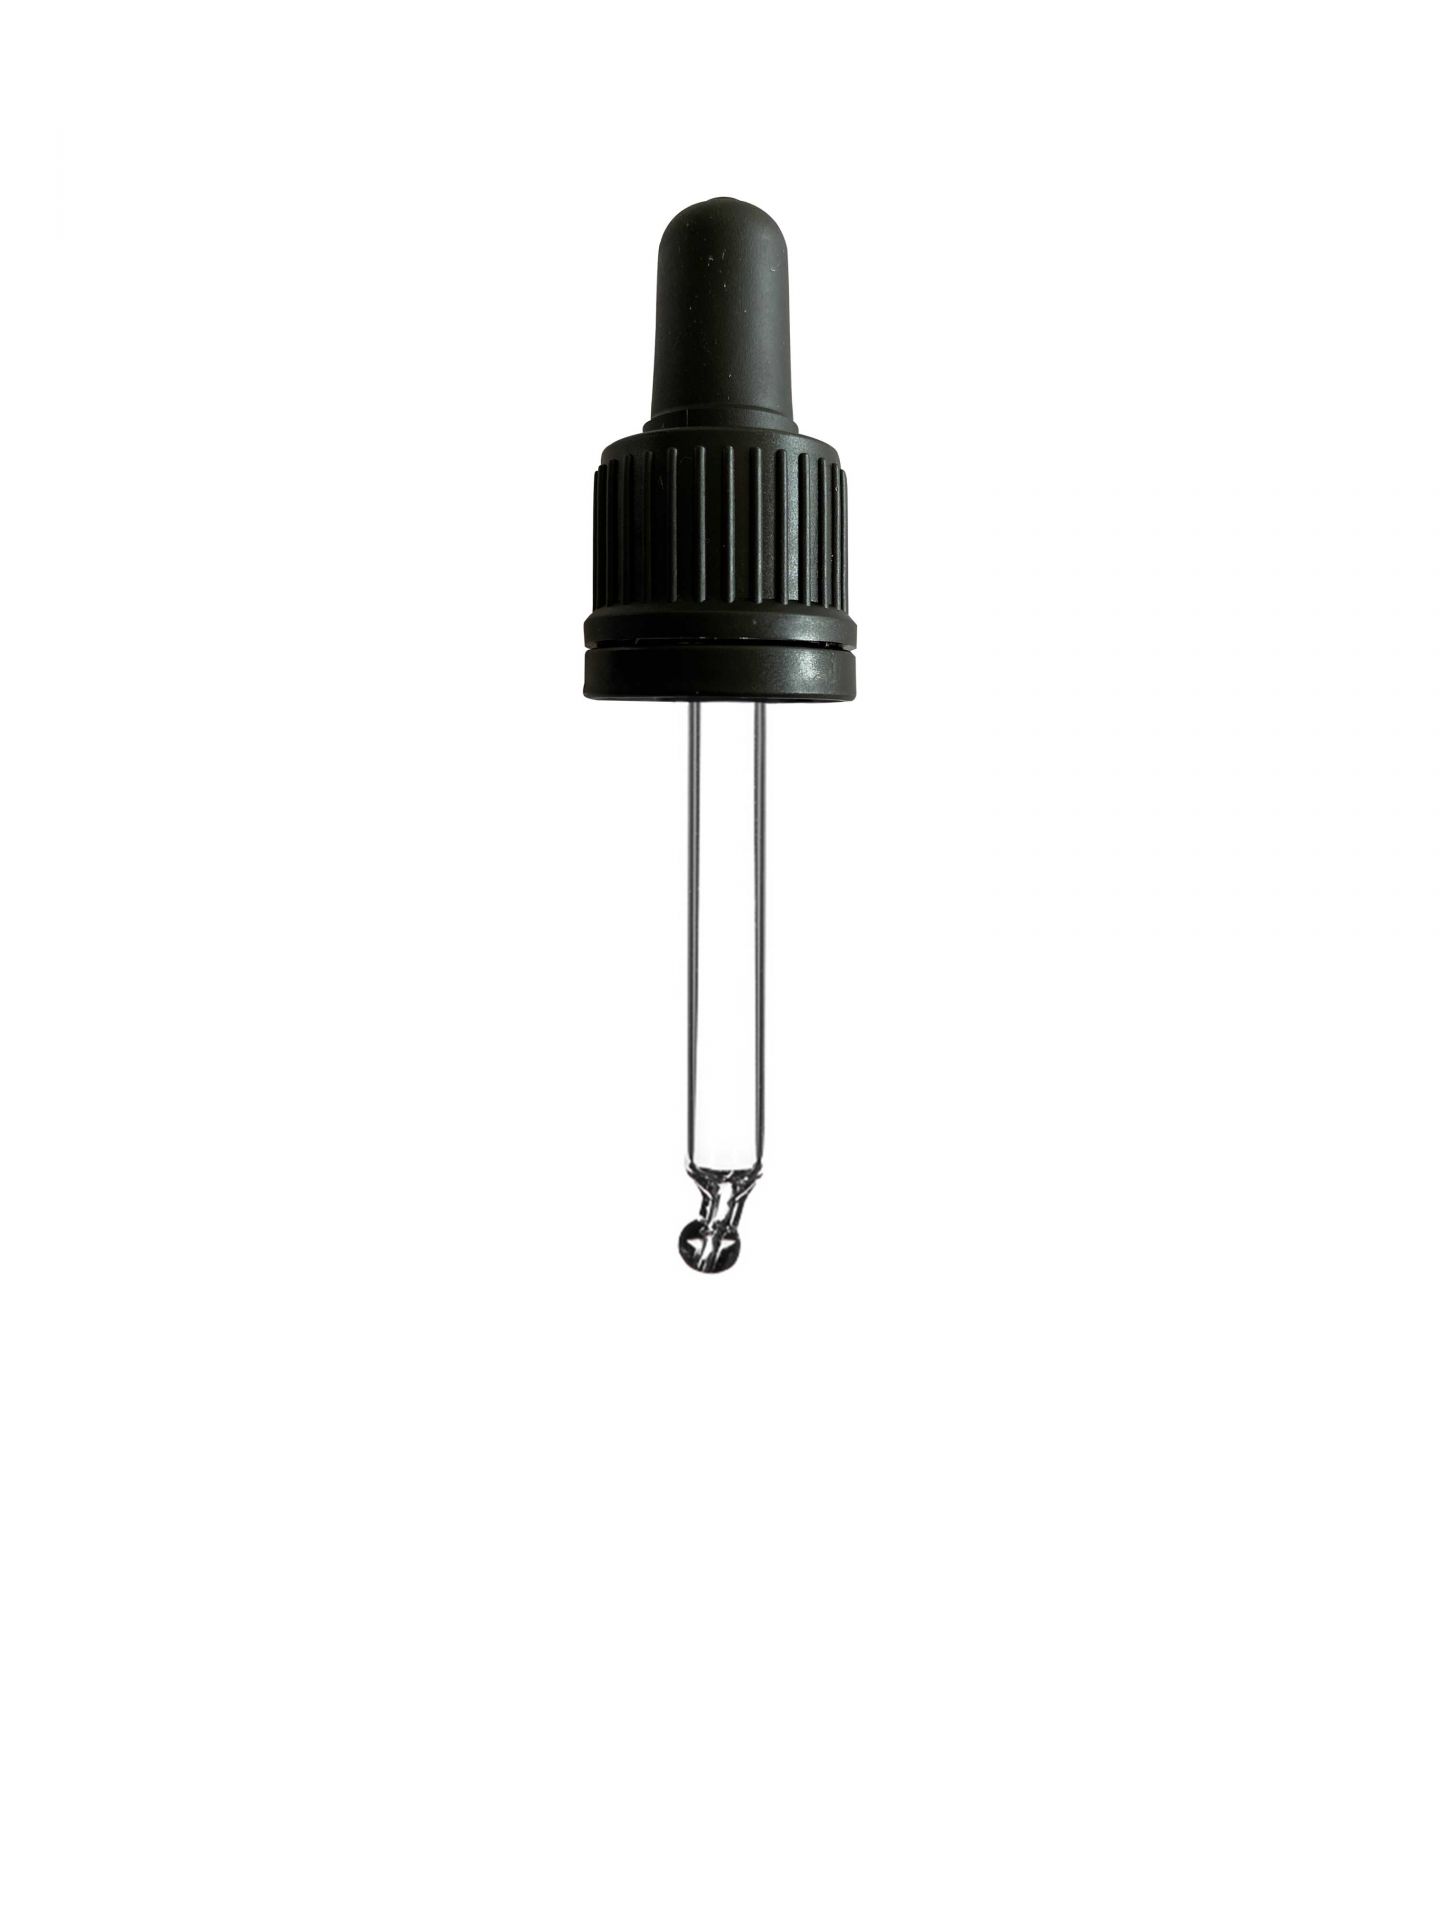 Pipette tamper evident DIN18, II, black, ribbed, bulb TPE, dose 0.7ml, bent ball tip (Orion 15)